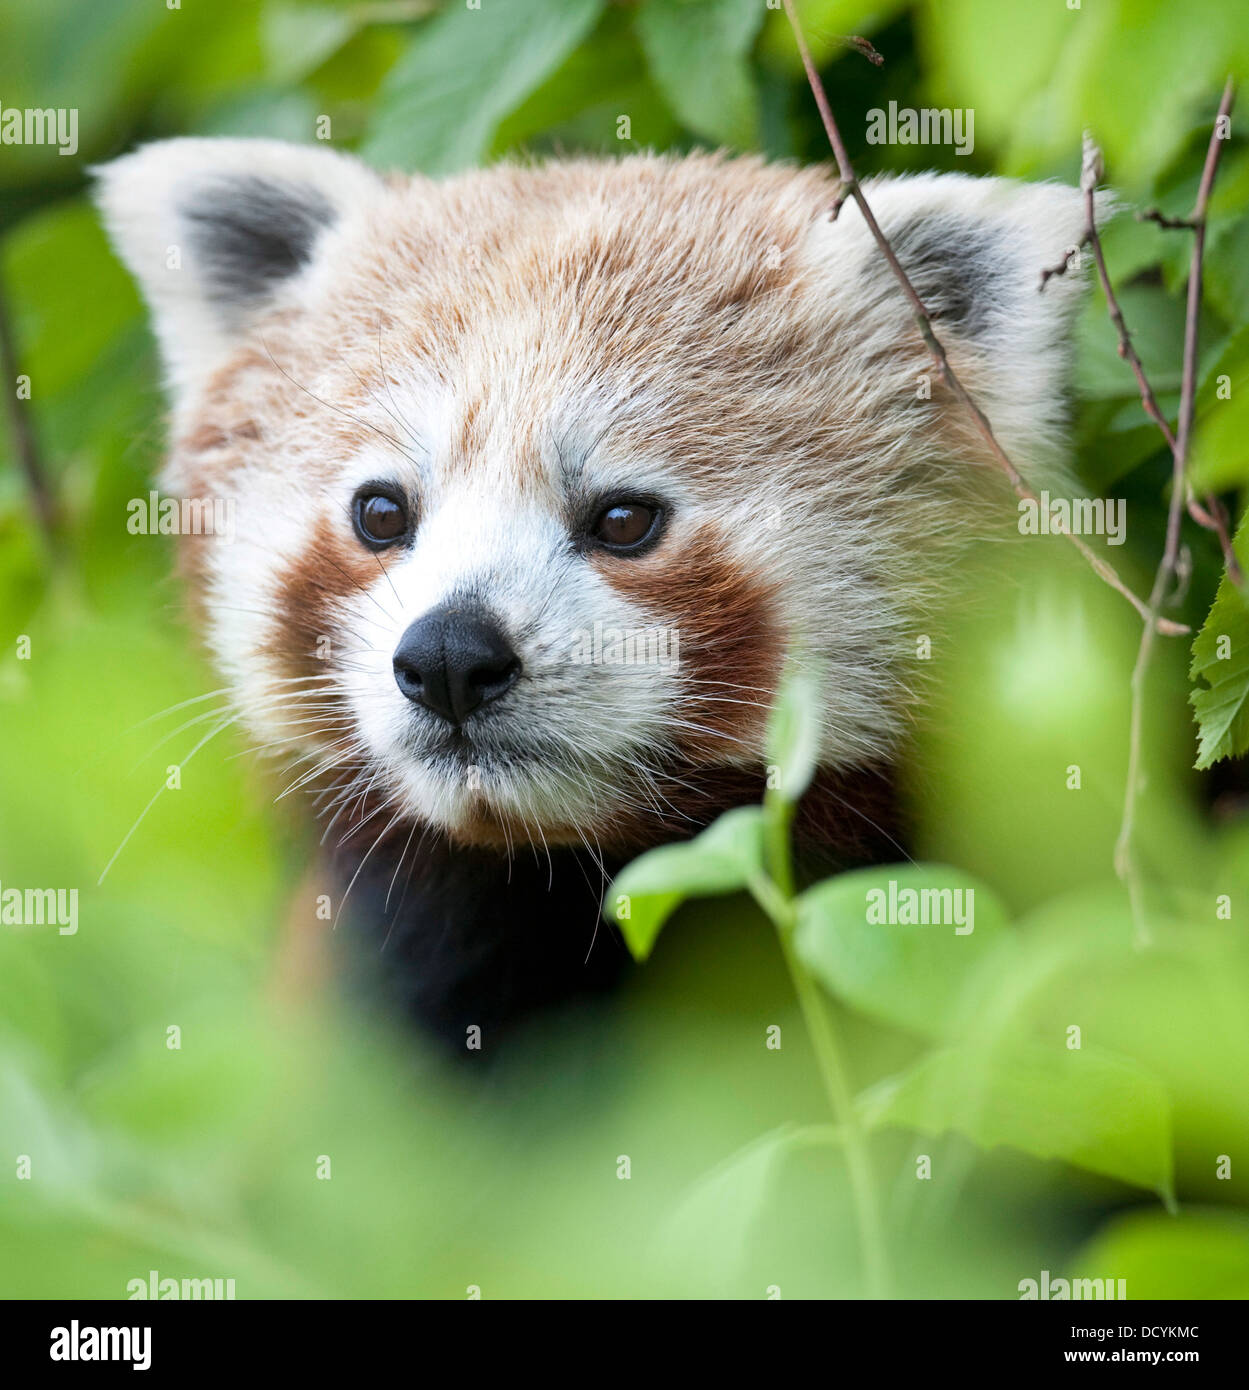 Panda rosso Ailurus fulgens Foto Stock